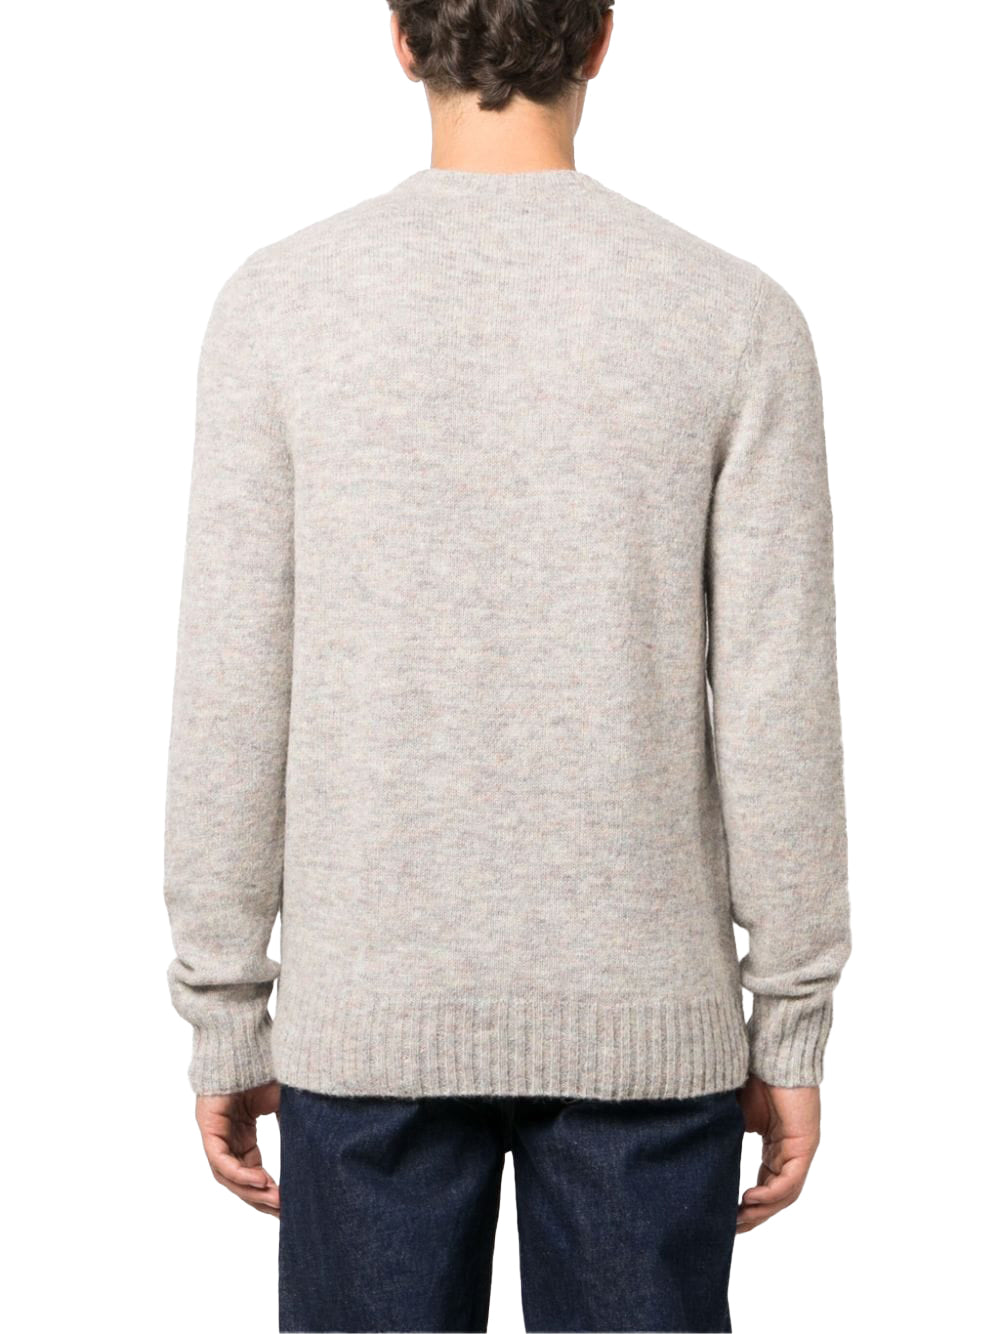 Lucas Gray Sweater